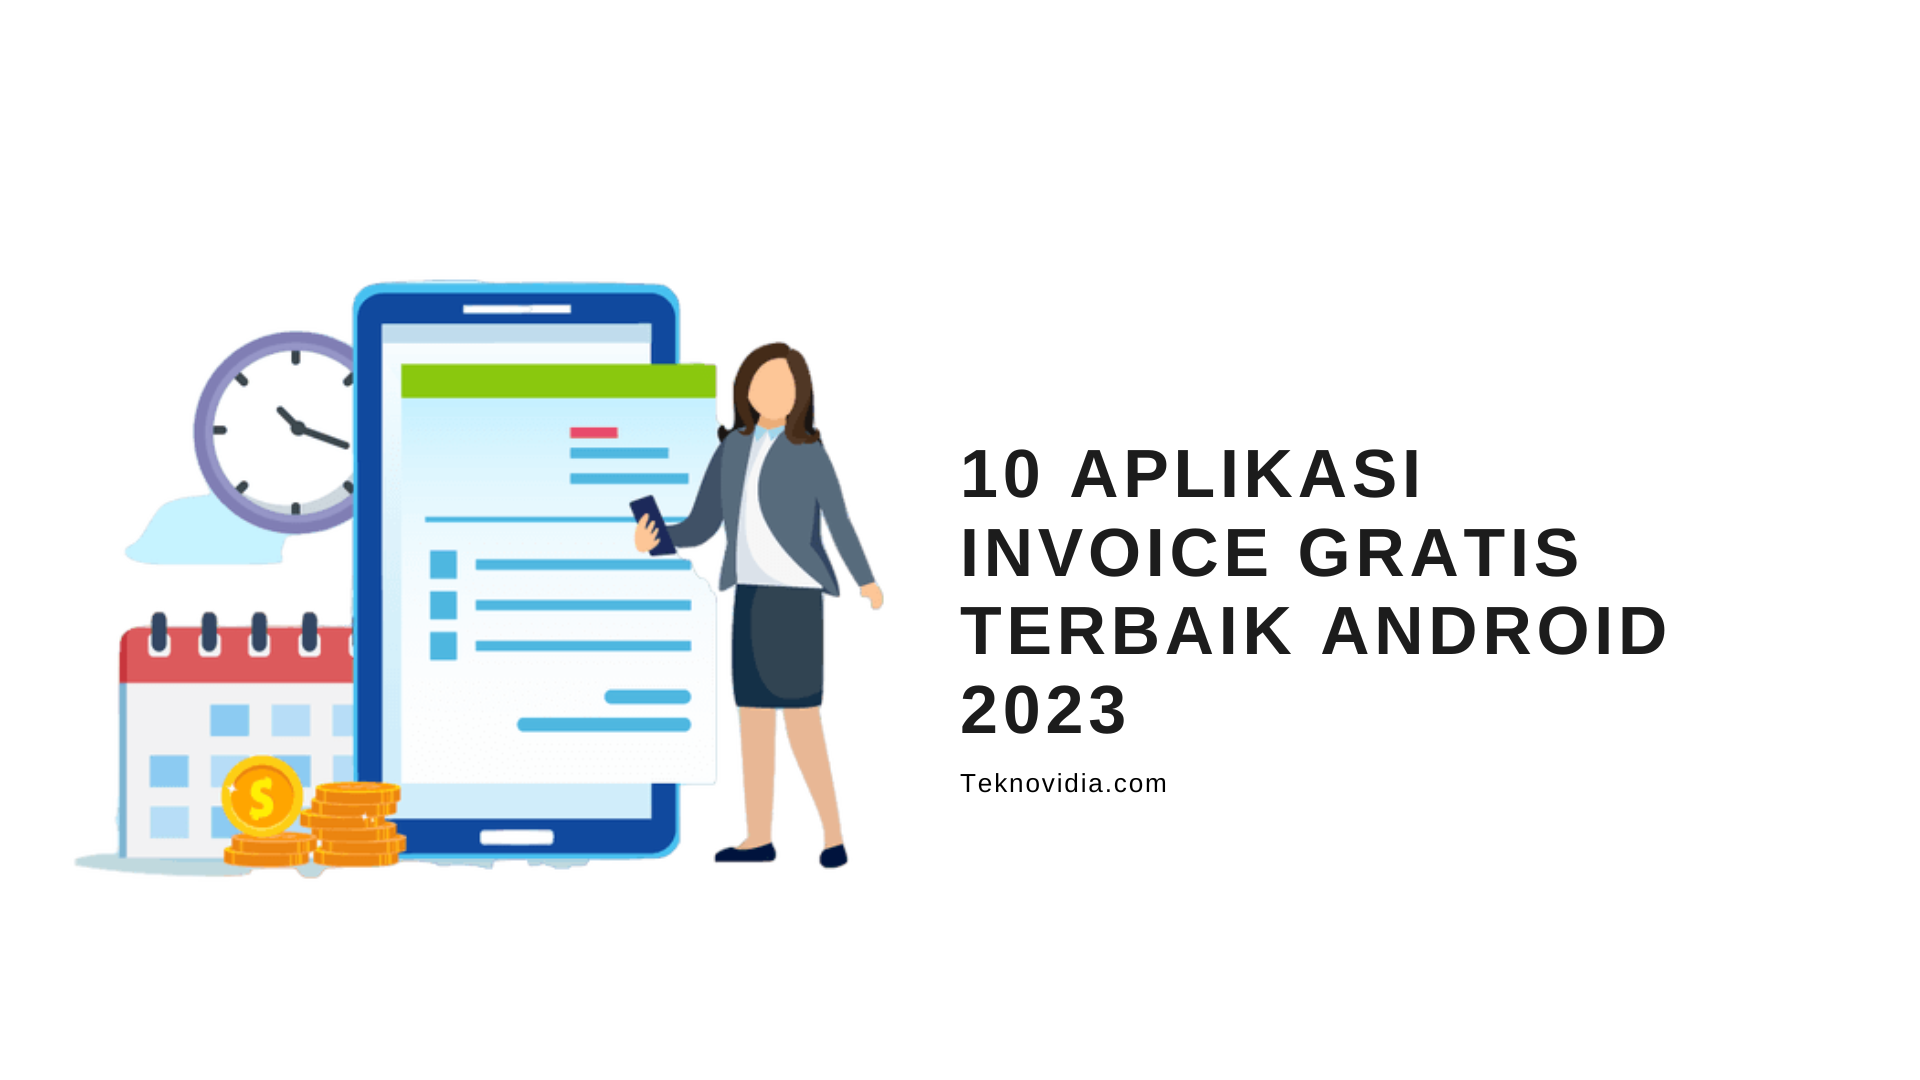 10 Aplikasi Invoice GRATIS Terbaik Android 2023